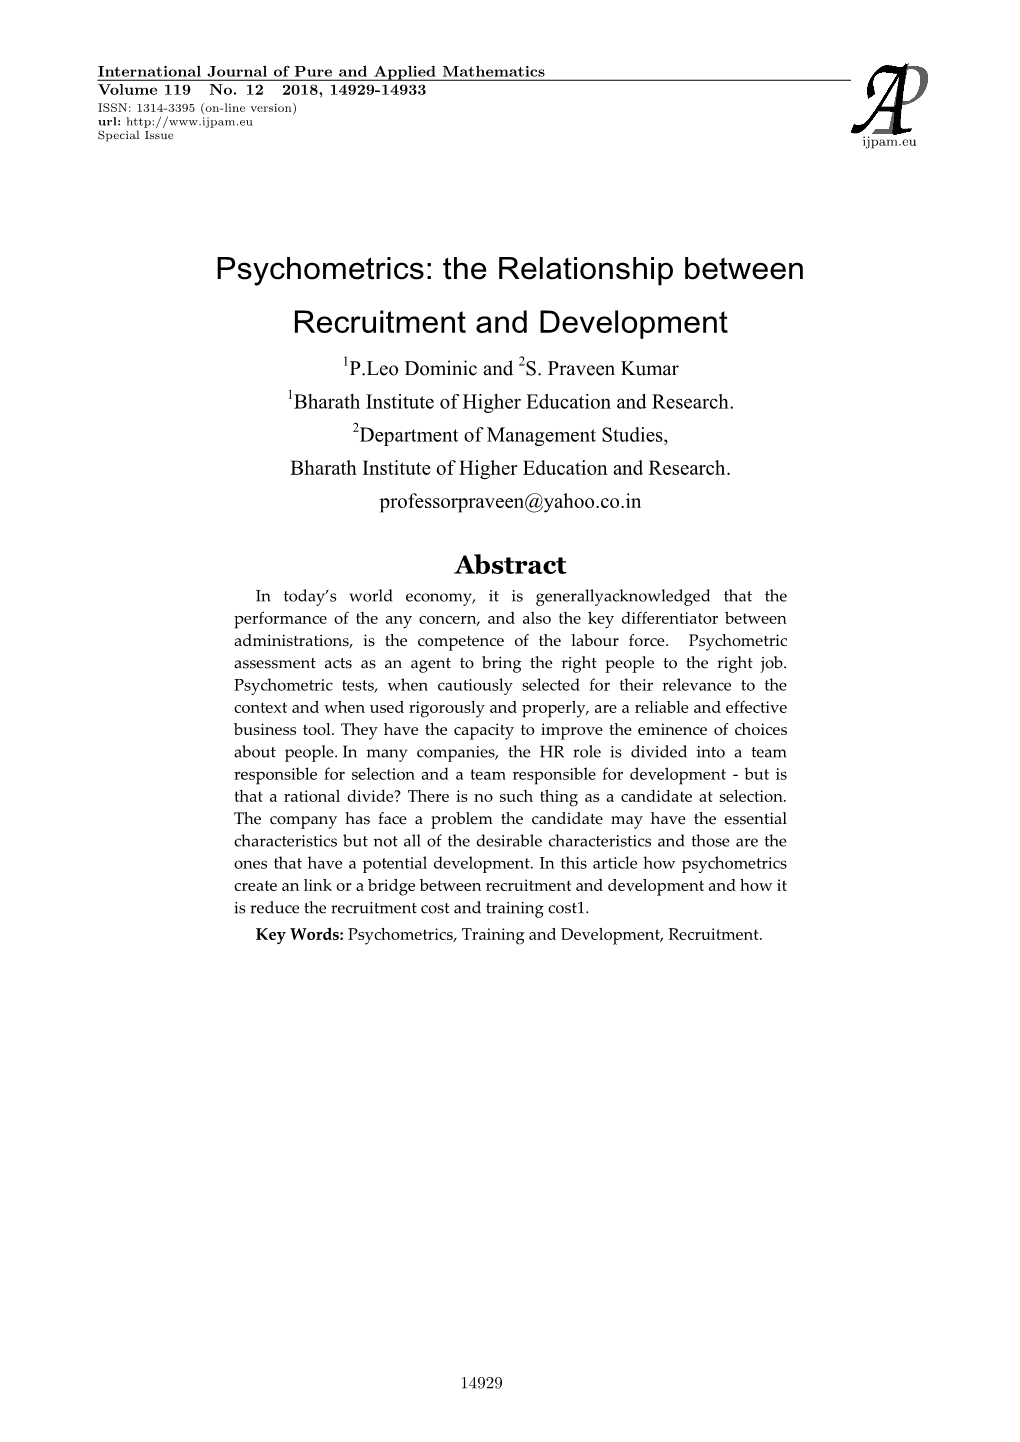 Psychometrics: the Relationship Between Recruitment and Development 1P.Leo Dominic and 2S